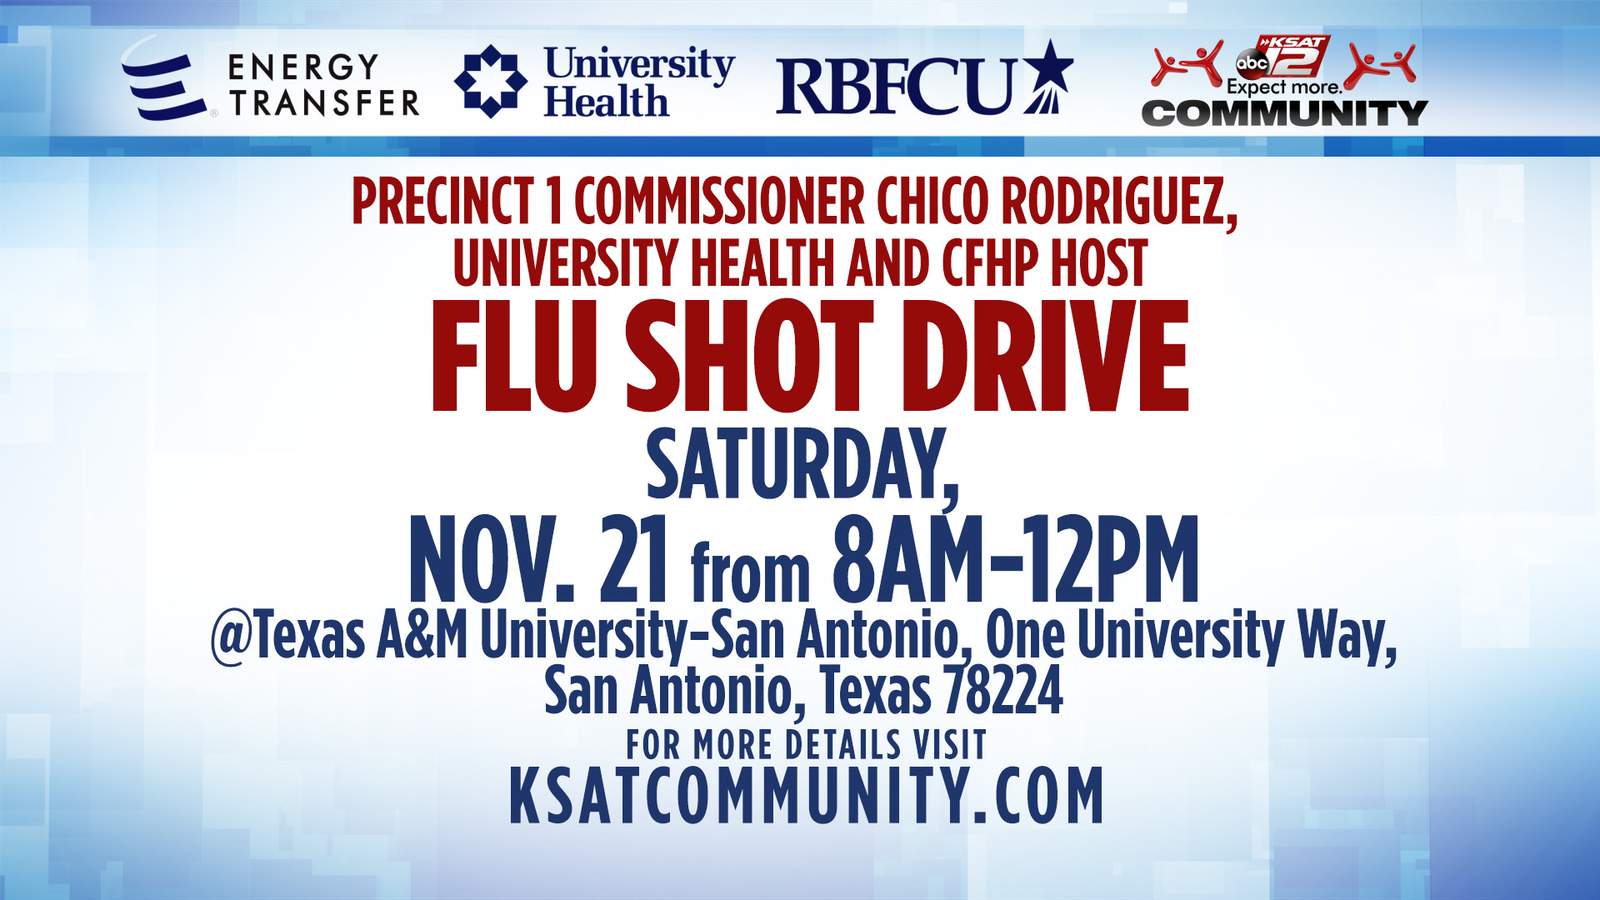 KSAT Community: Need a flu shot? University Health to host drive Saturday